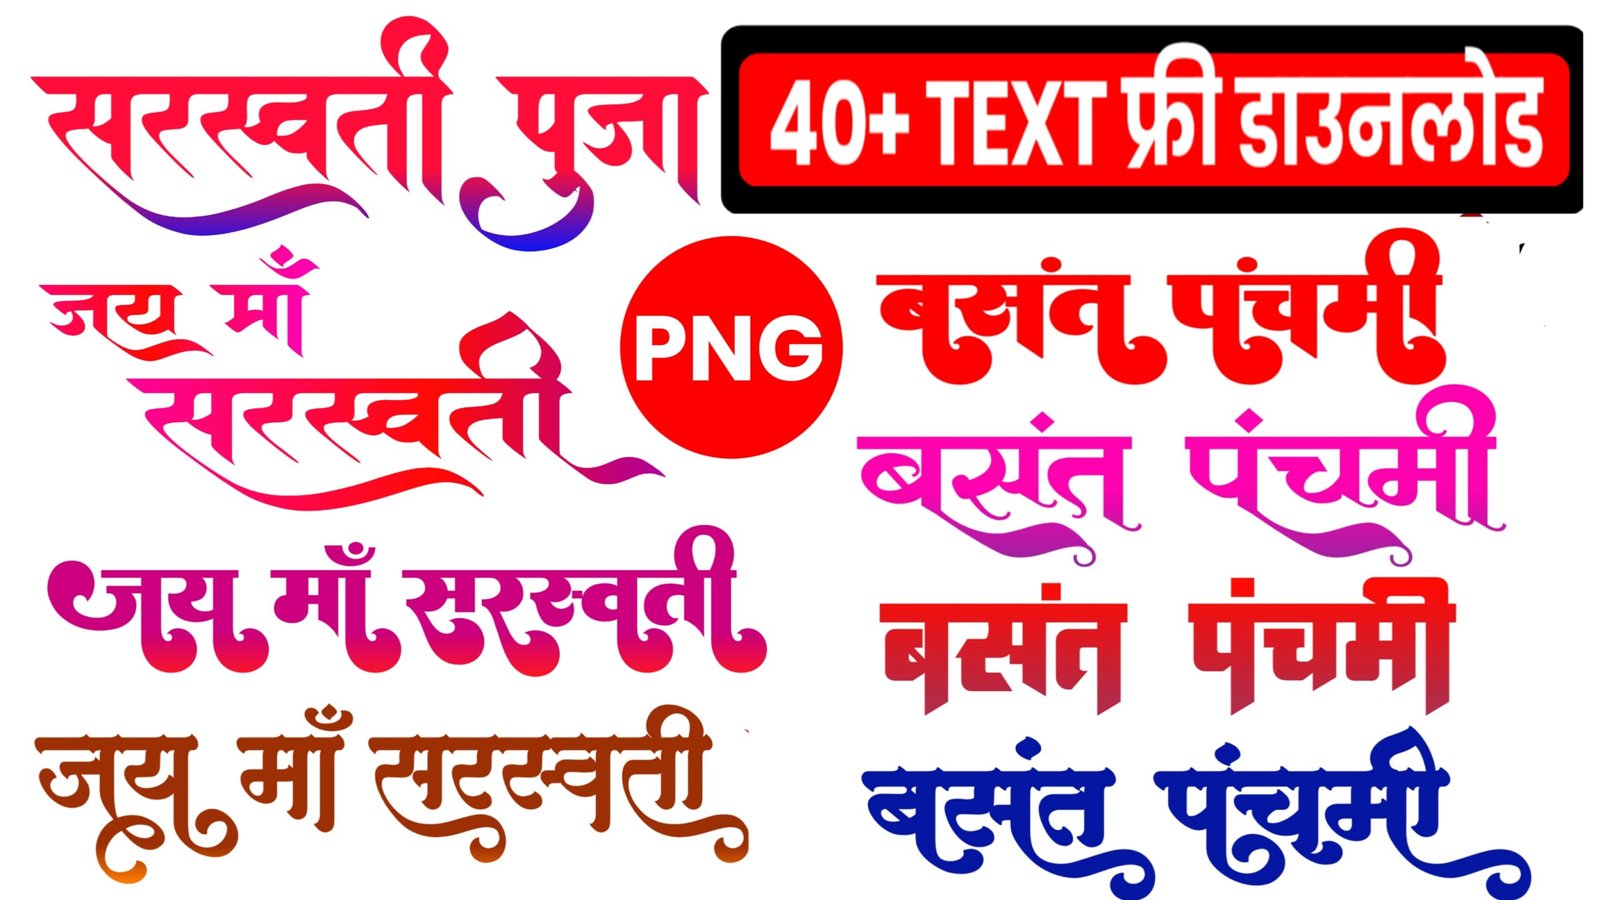 40+ basant panchmi text png download kare| new text png basant panchmi|